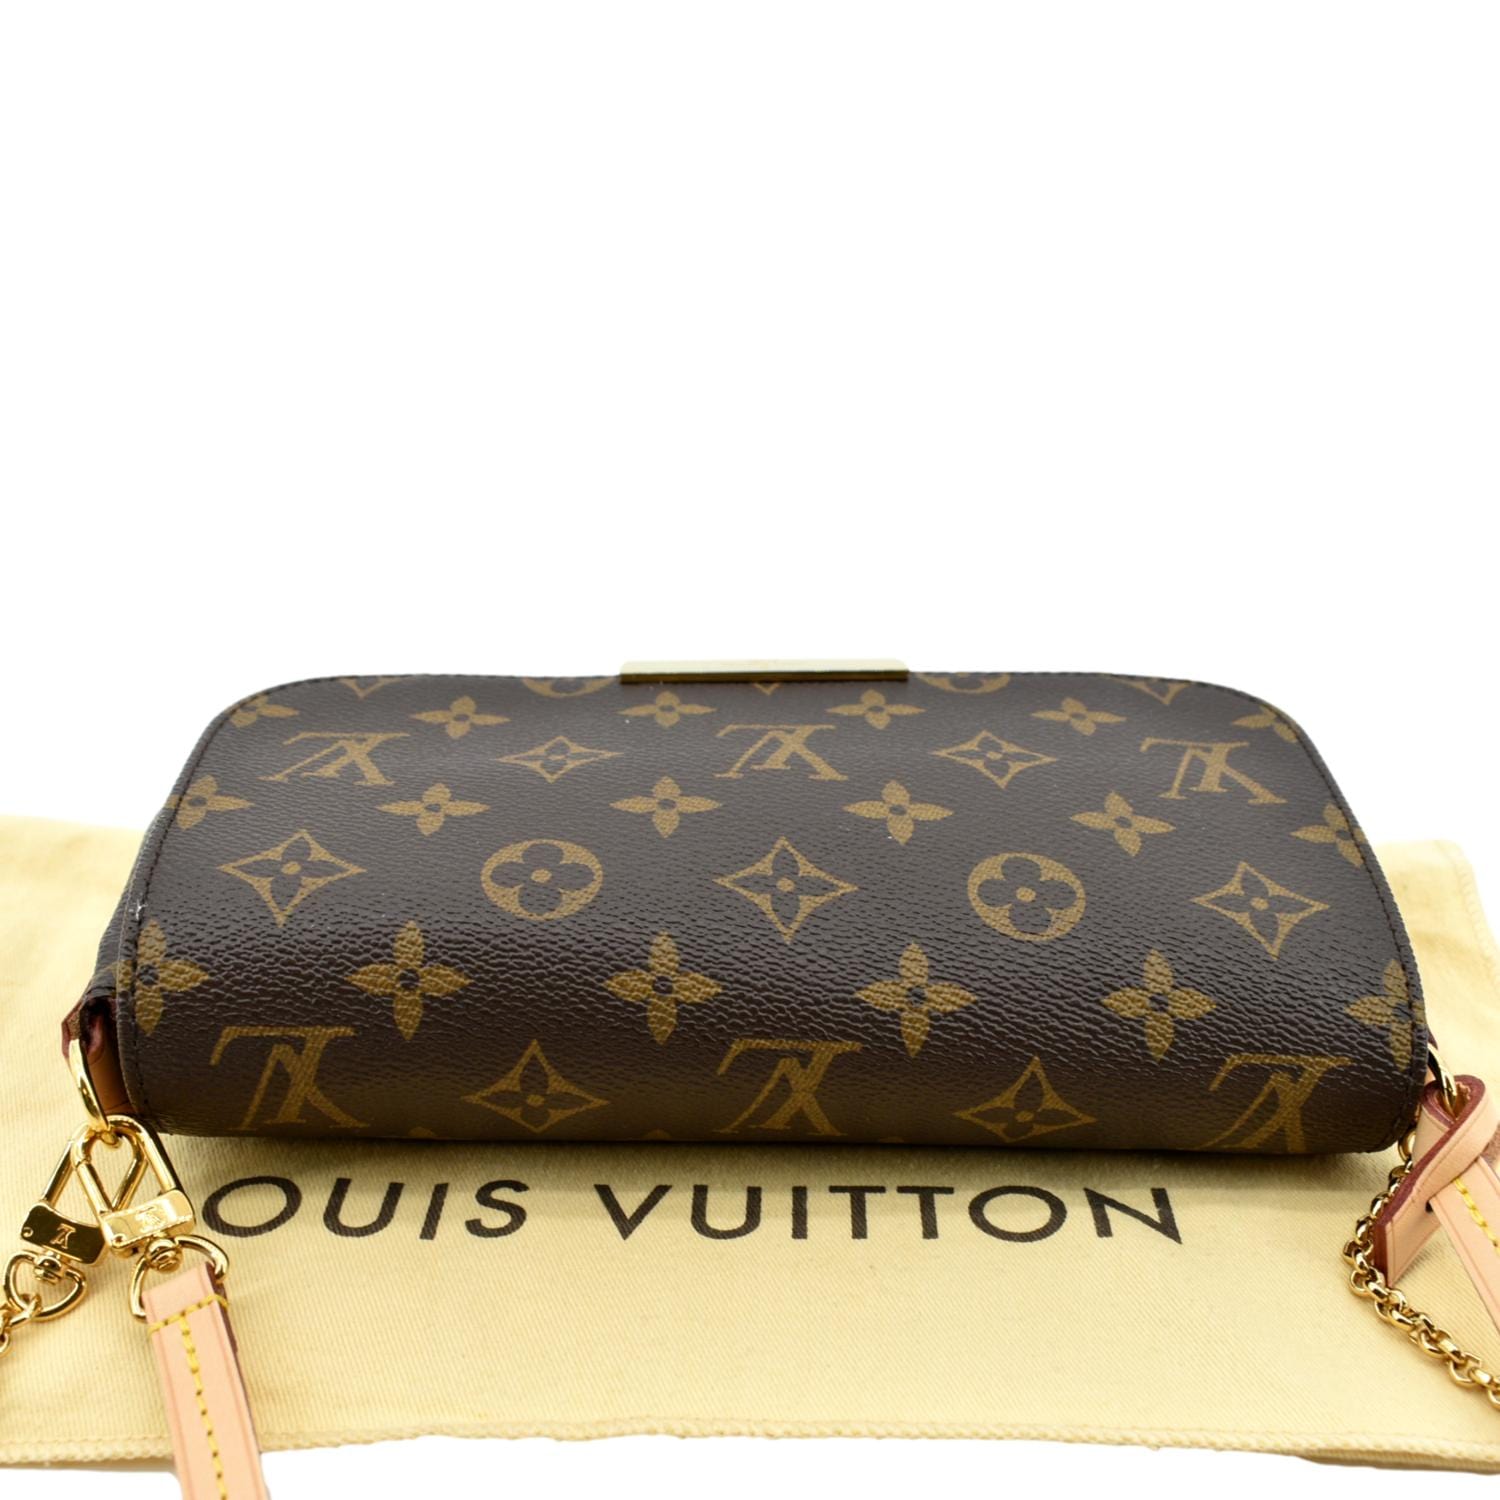 How to make Louis Vuitton Toiletry 19 a Crossbody Bag